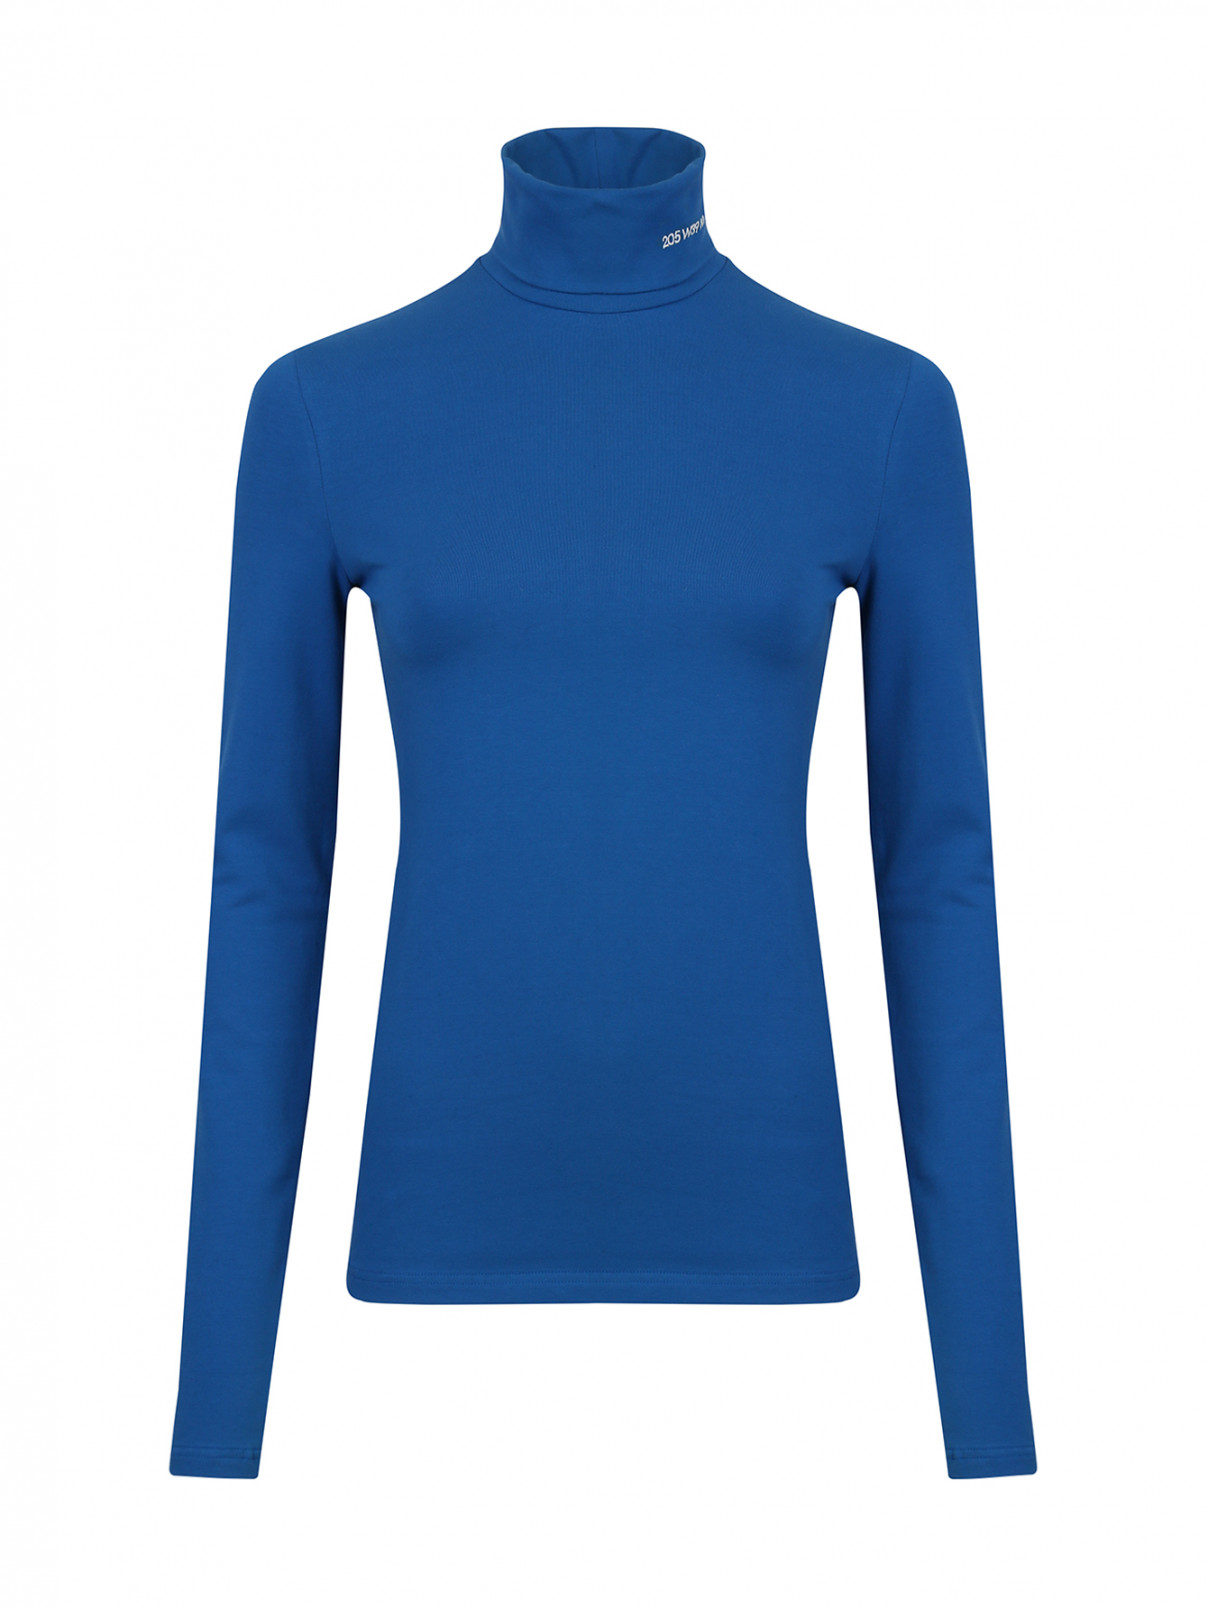 Водолазка из хлопка Calvin Klein 205W39NYC  –  Общий вид  – Цвет:  Синий